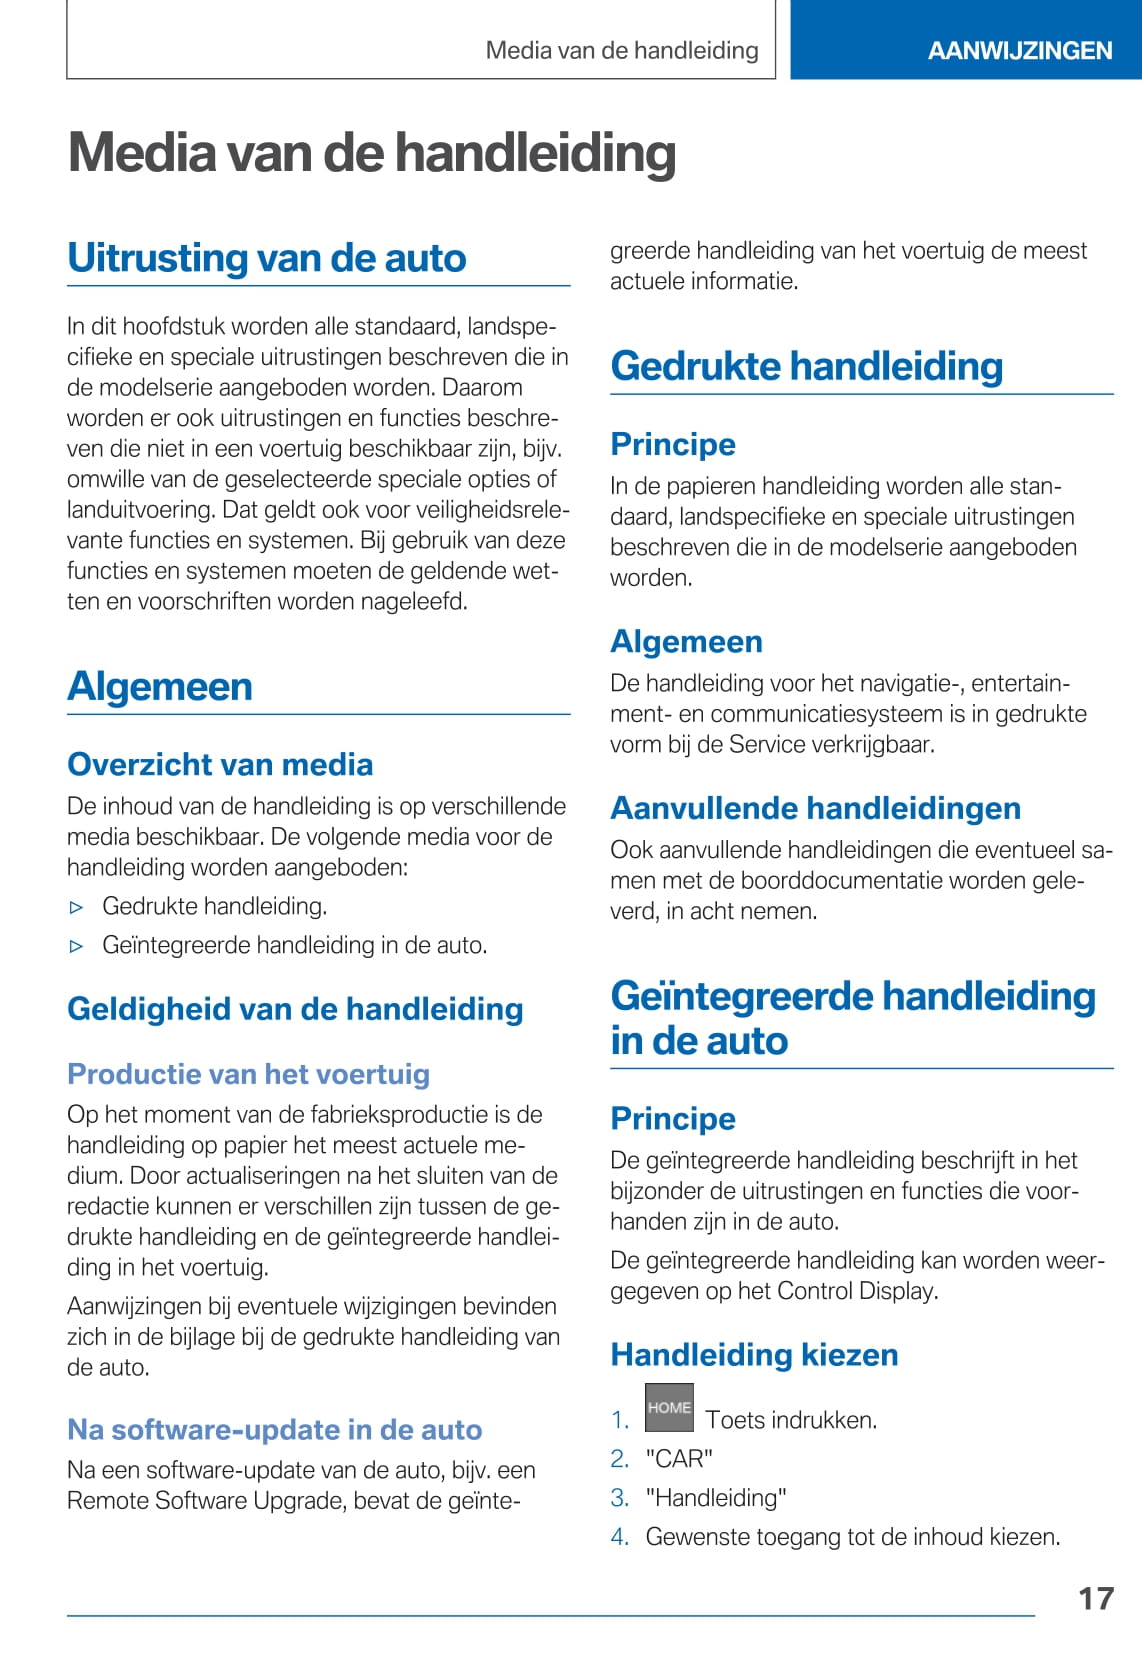 2020-2021 BMW 5 Series Owner's Manual | Dutch